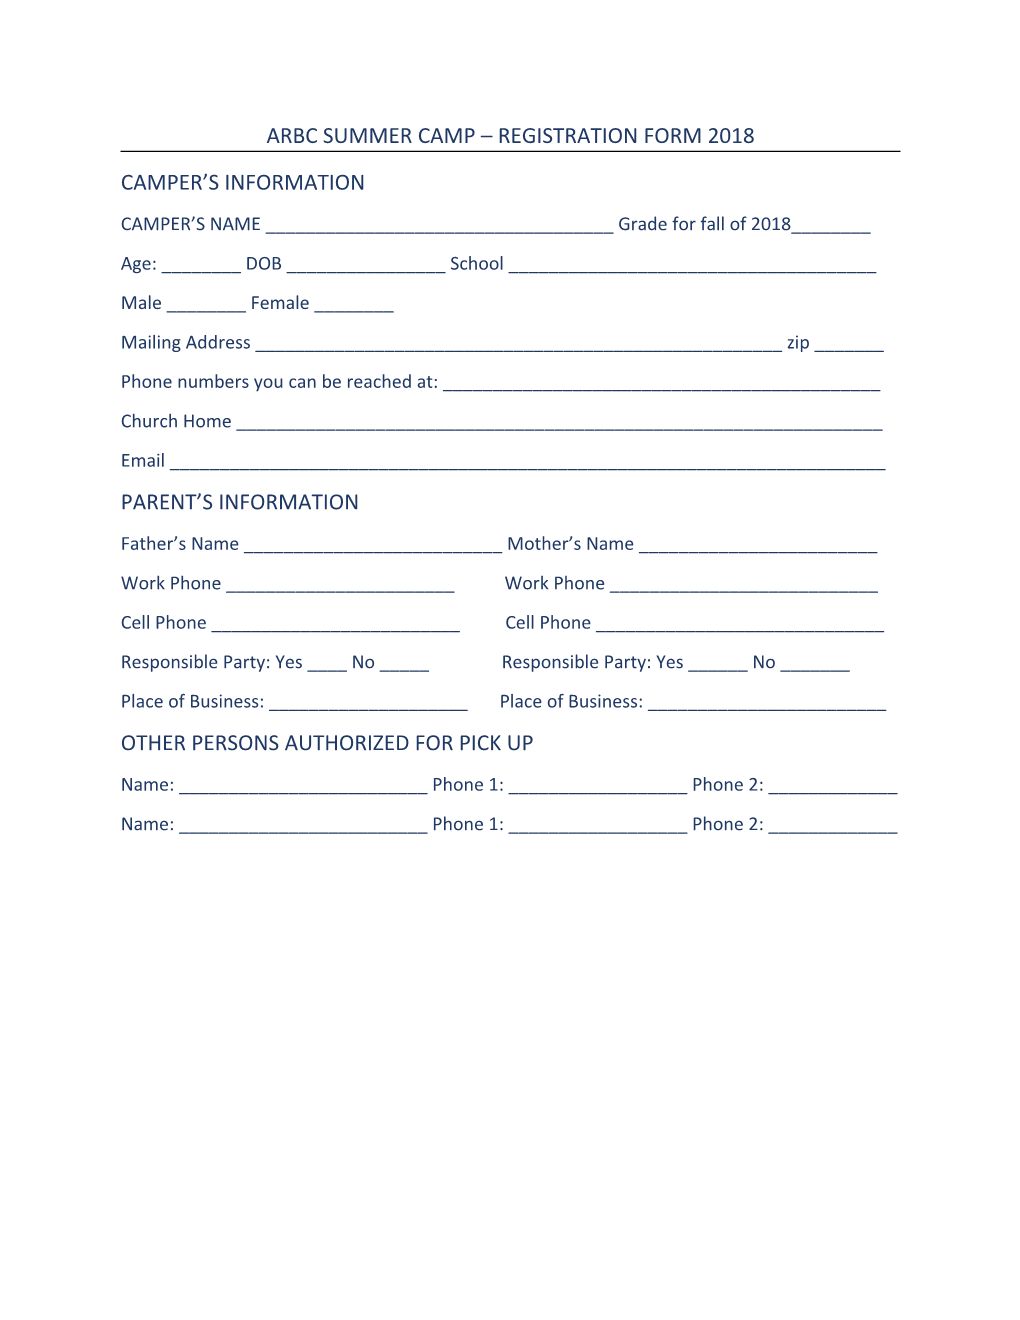 Arbc Summer Camp Registration Form 2018